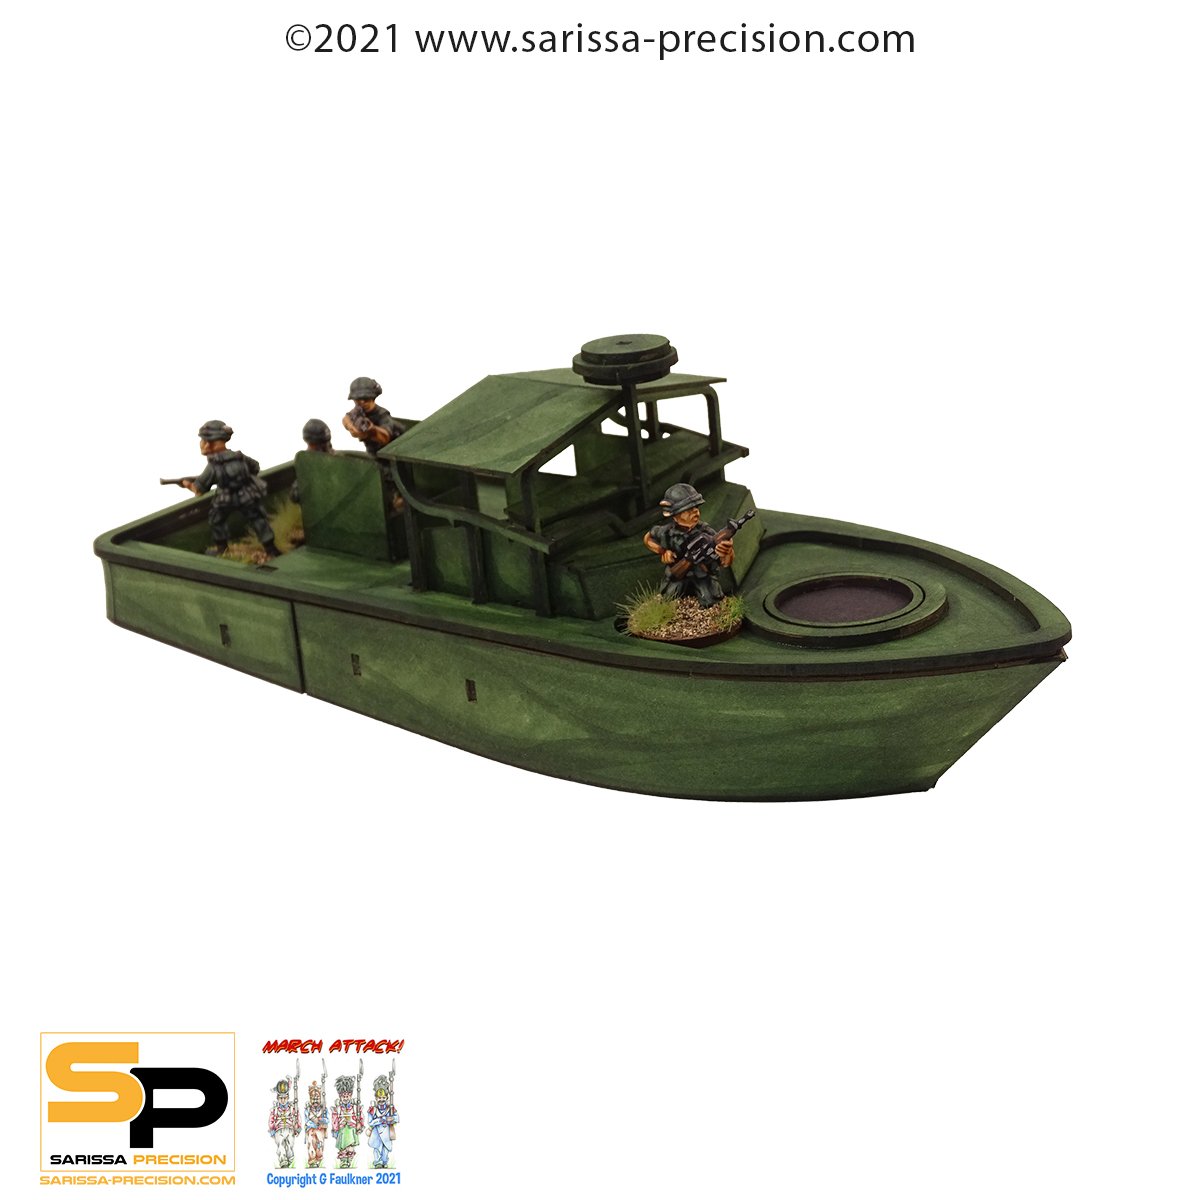 Patrol Boat Riverine PBR #1 - Sarissa Precision